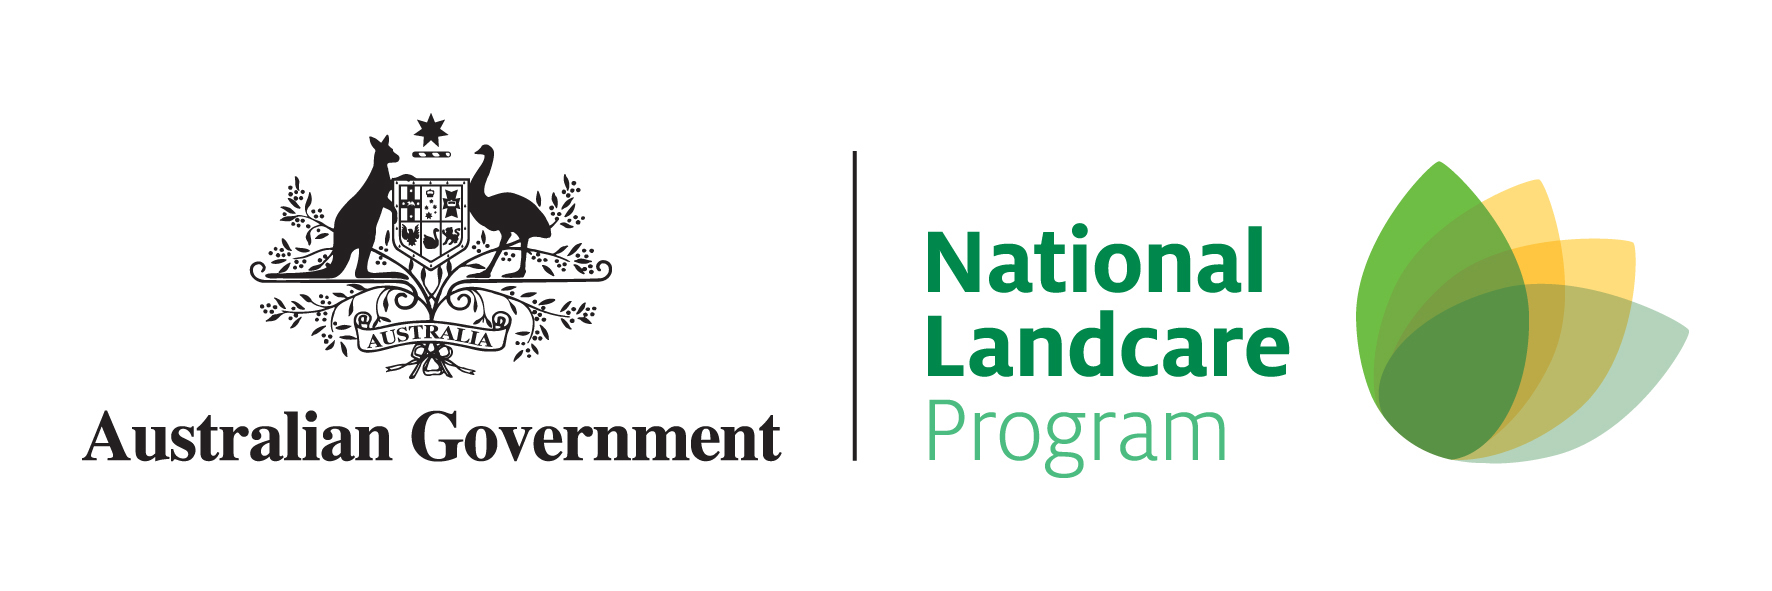 National Landcare Program NLP